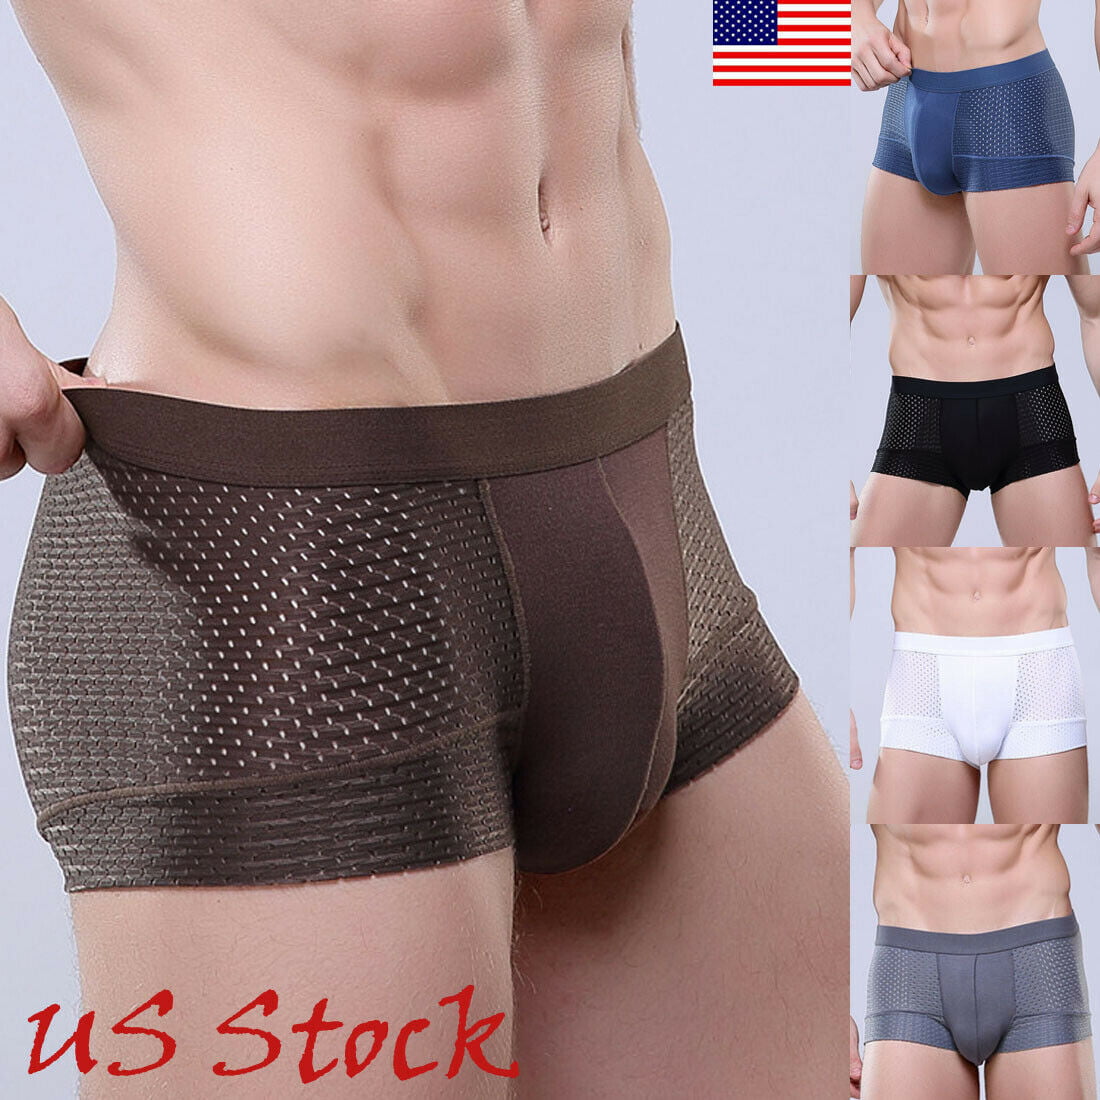 BHYDRY Men Transparent Underwear Printed Boxer Brief Shorts Bulge Pouch Underpants Solid Color Panties